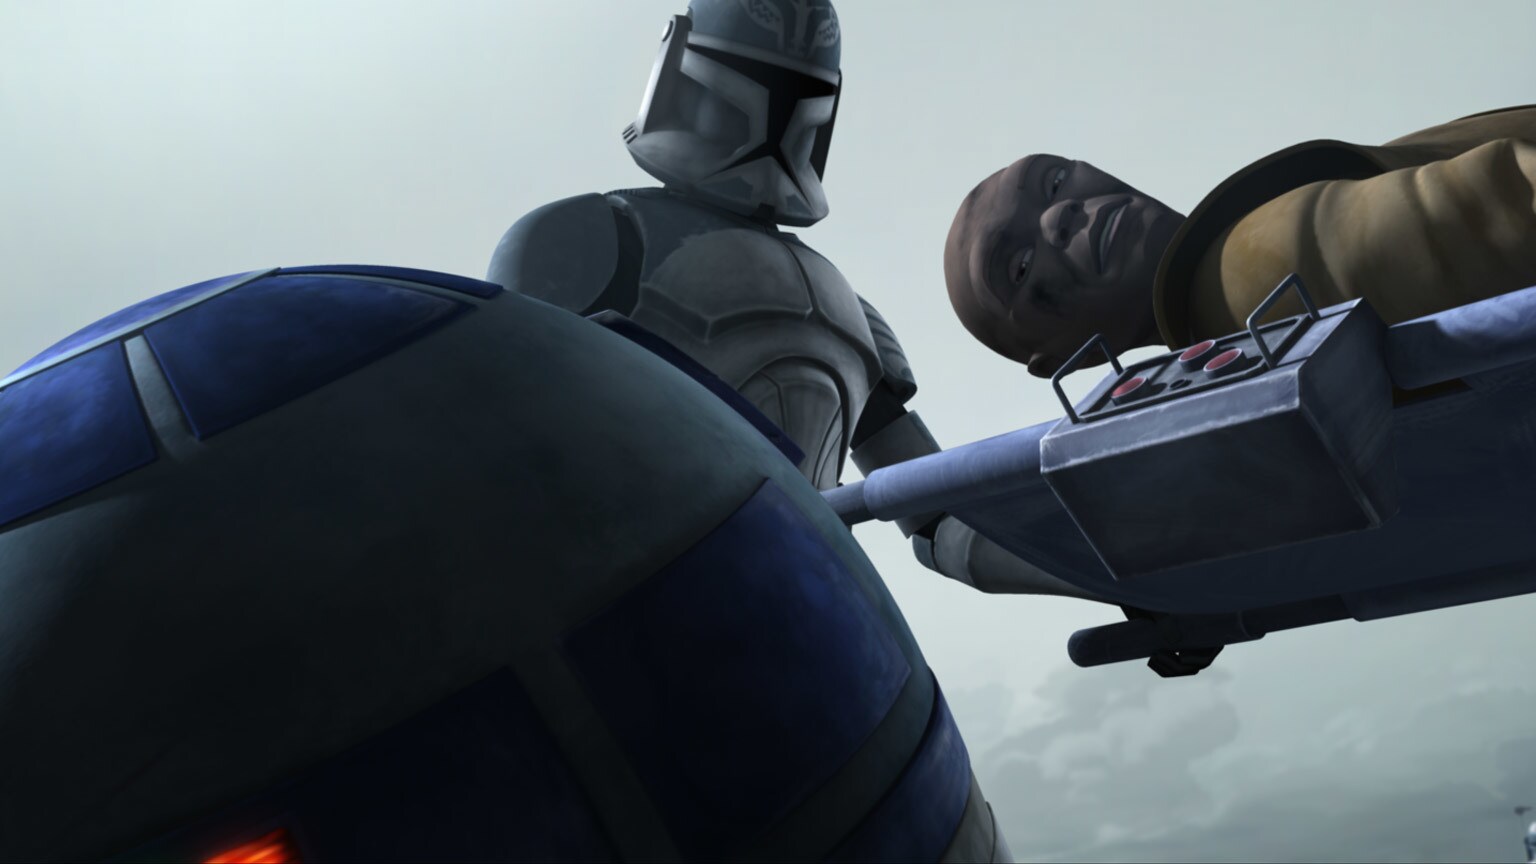 The Clone Wars Rewatch: "R2 Come Home"